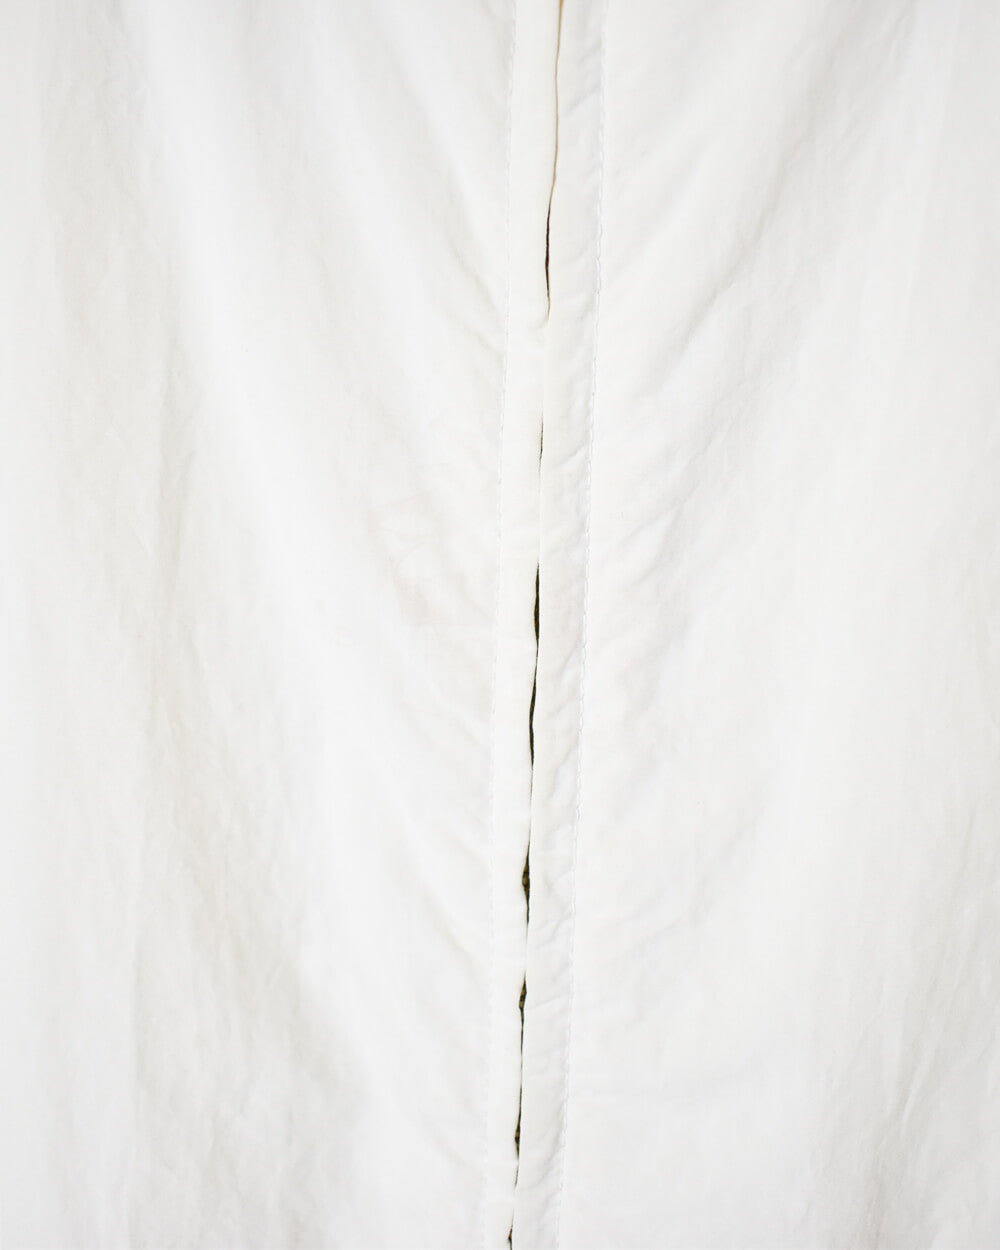 White Ralph Lauren Jacket - XX-Large